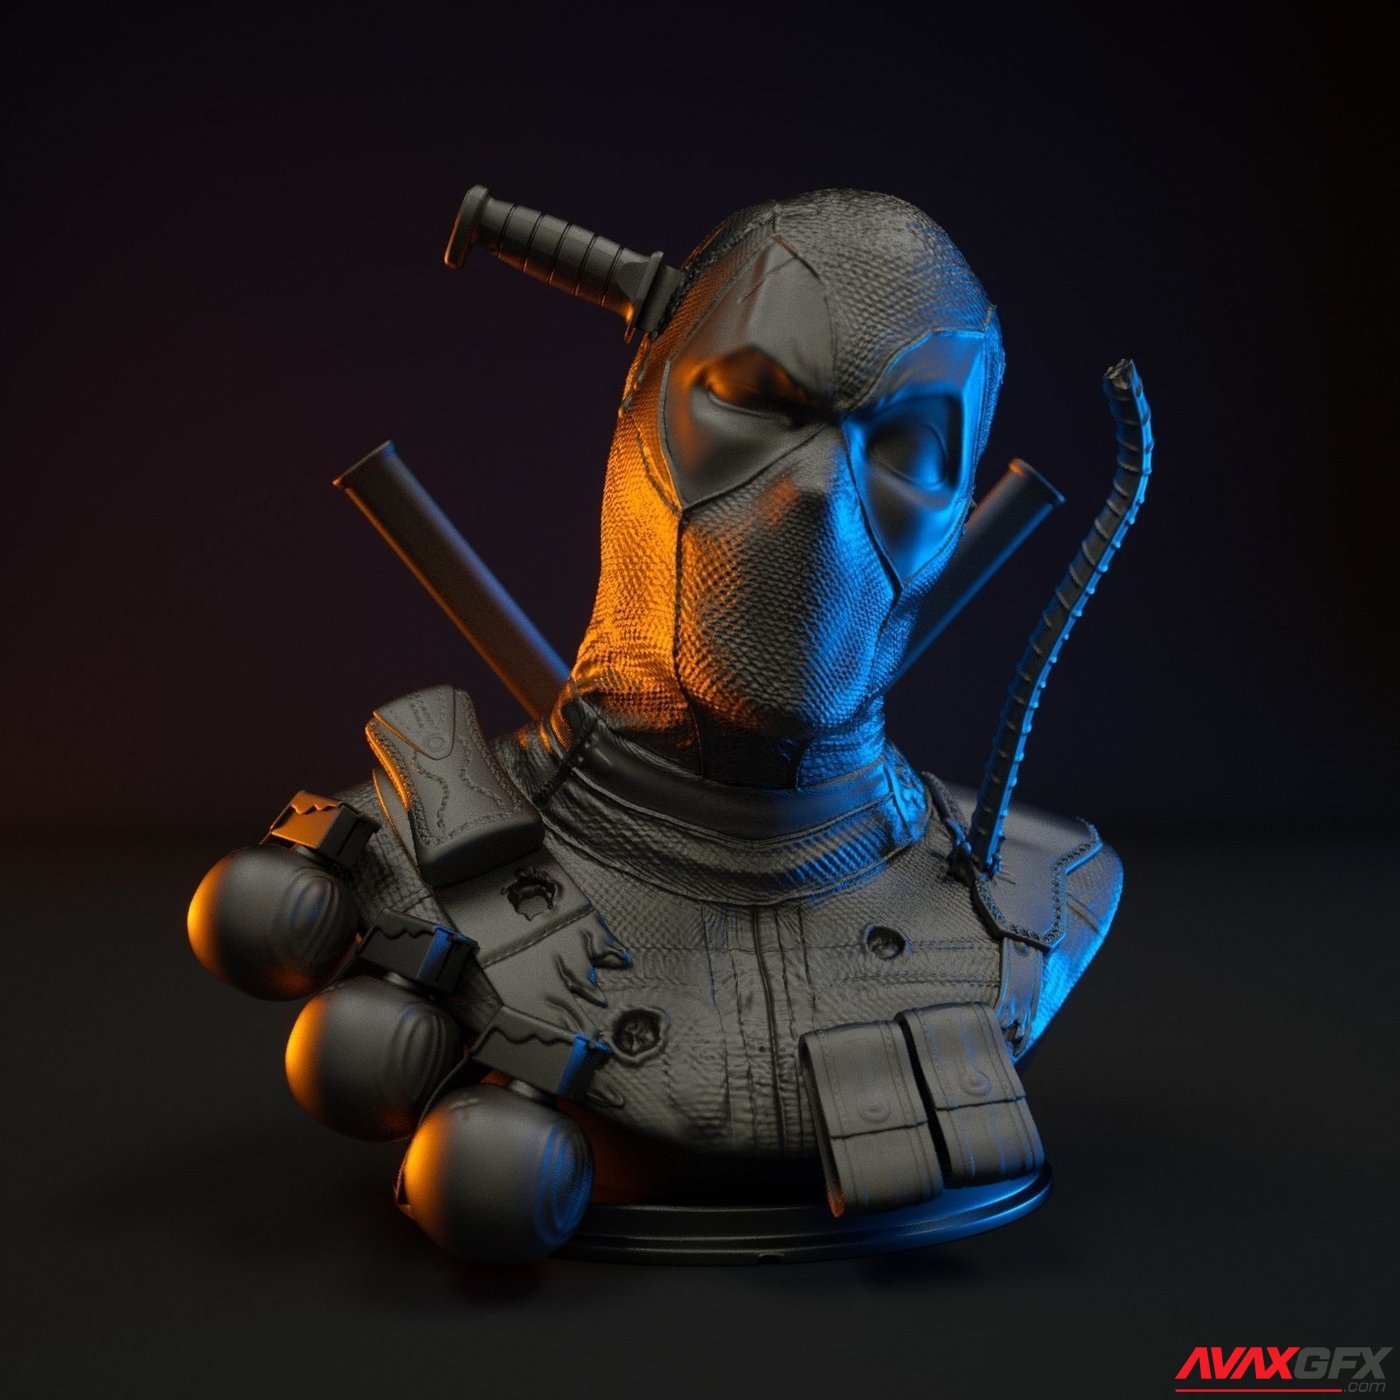 3D-model – Deadpool bust